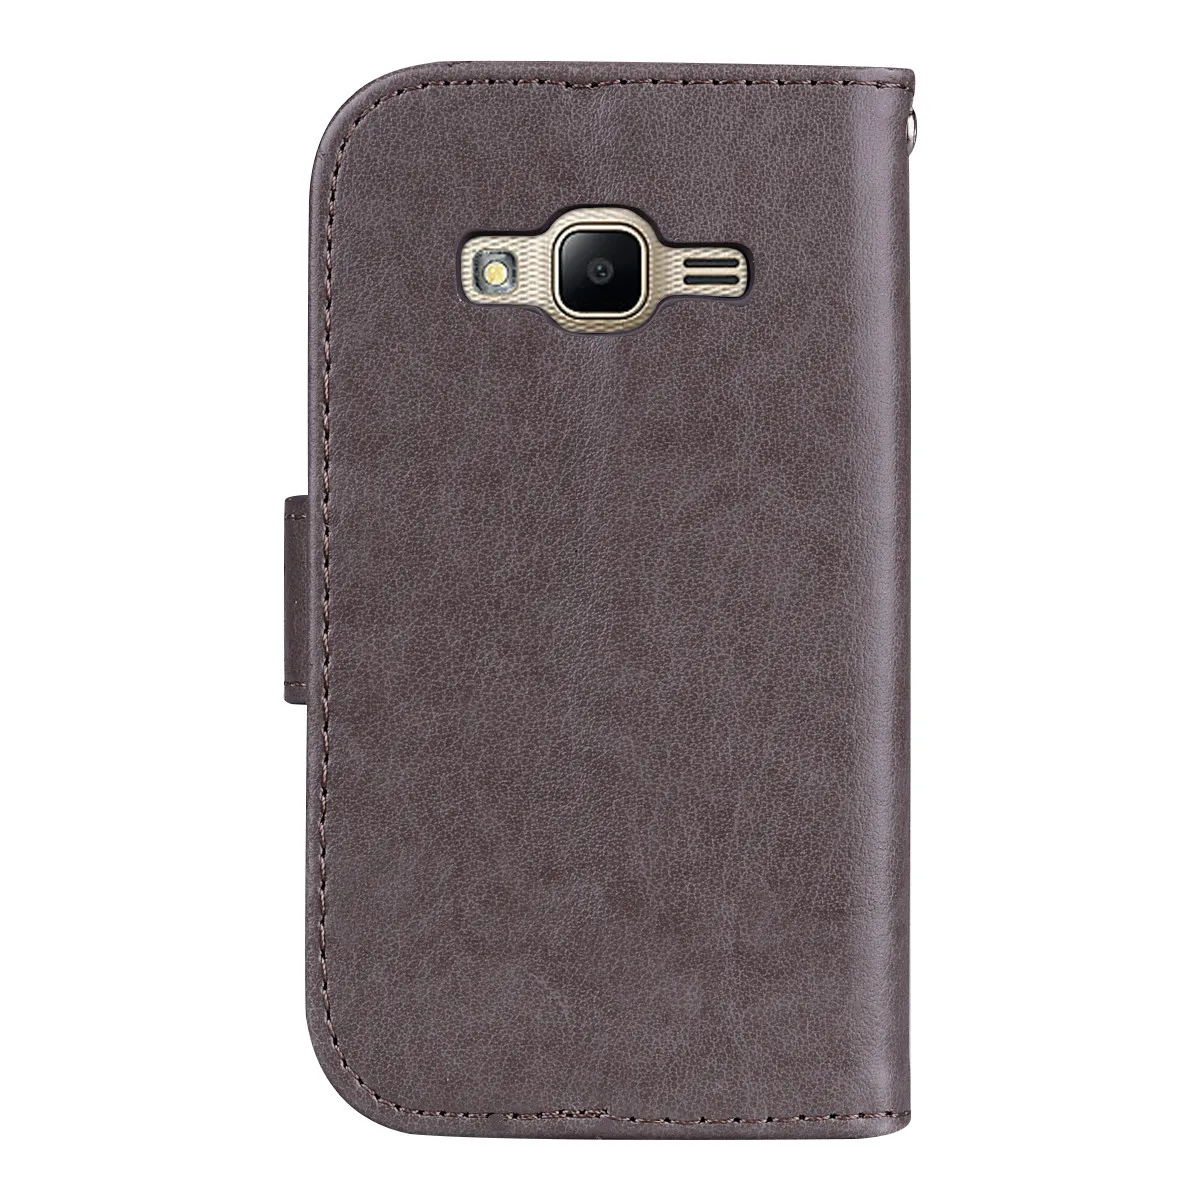 Leather Flip Case For Samsung Galaxy J1 2016 2016 J120F J120 J2 Grand Prime G530 G532 Wallet Cover Hoesje Funda kawaii samsung cases